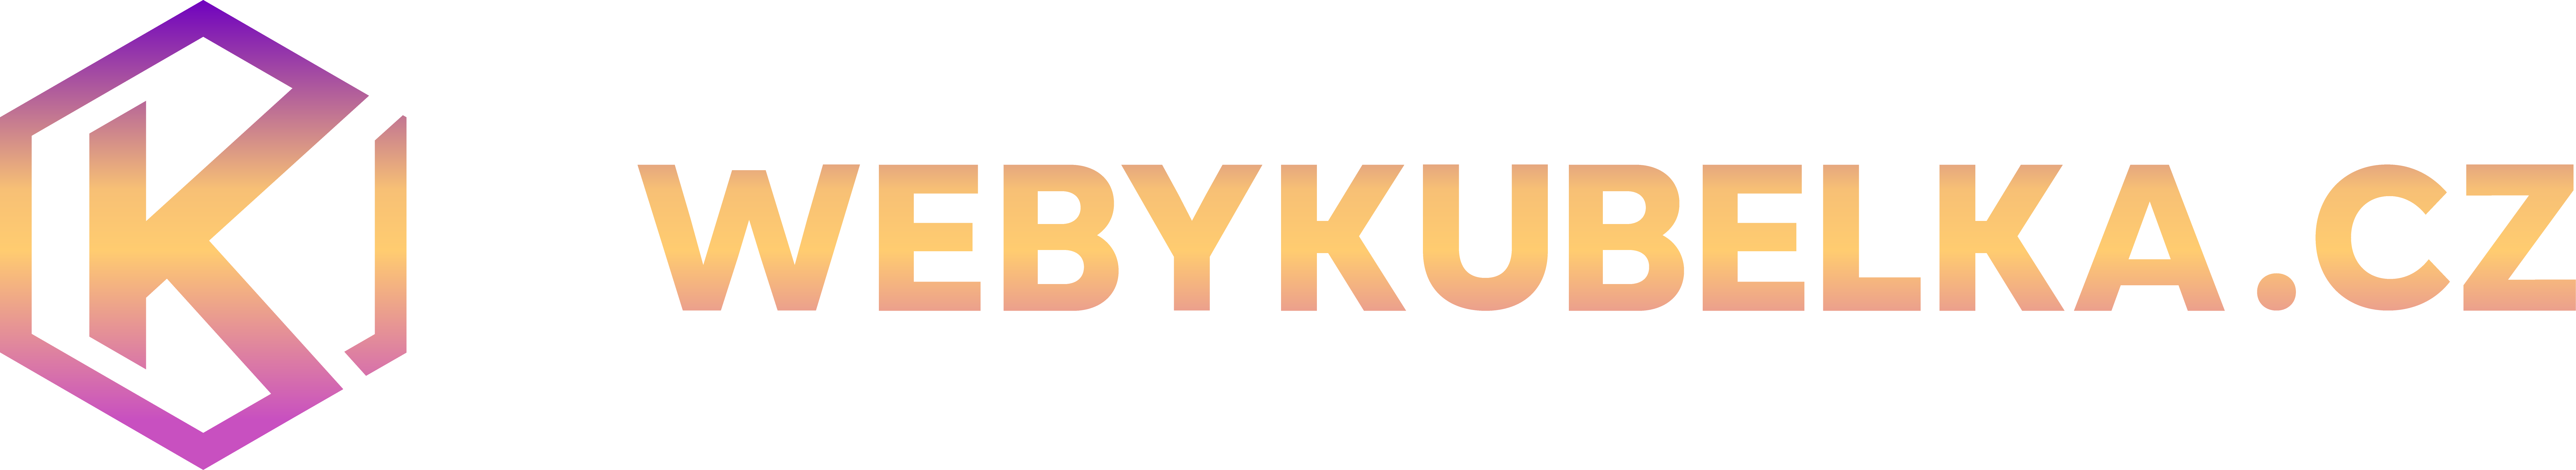 webykubelka.cz logo